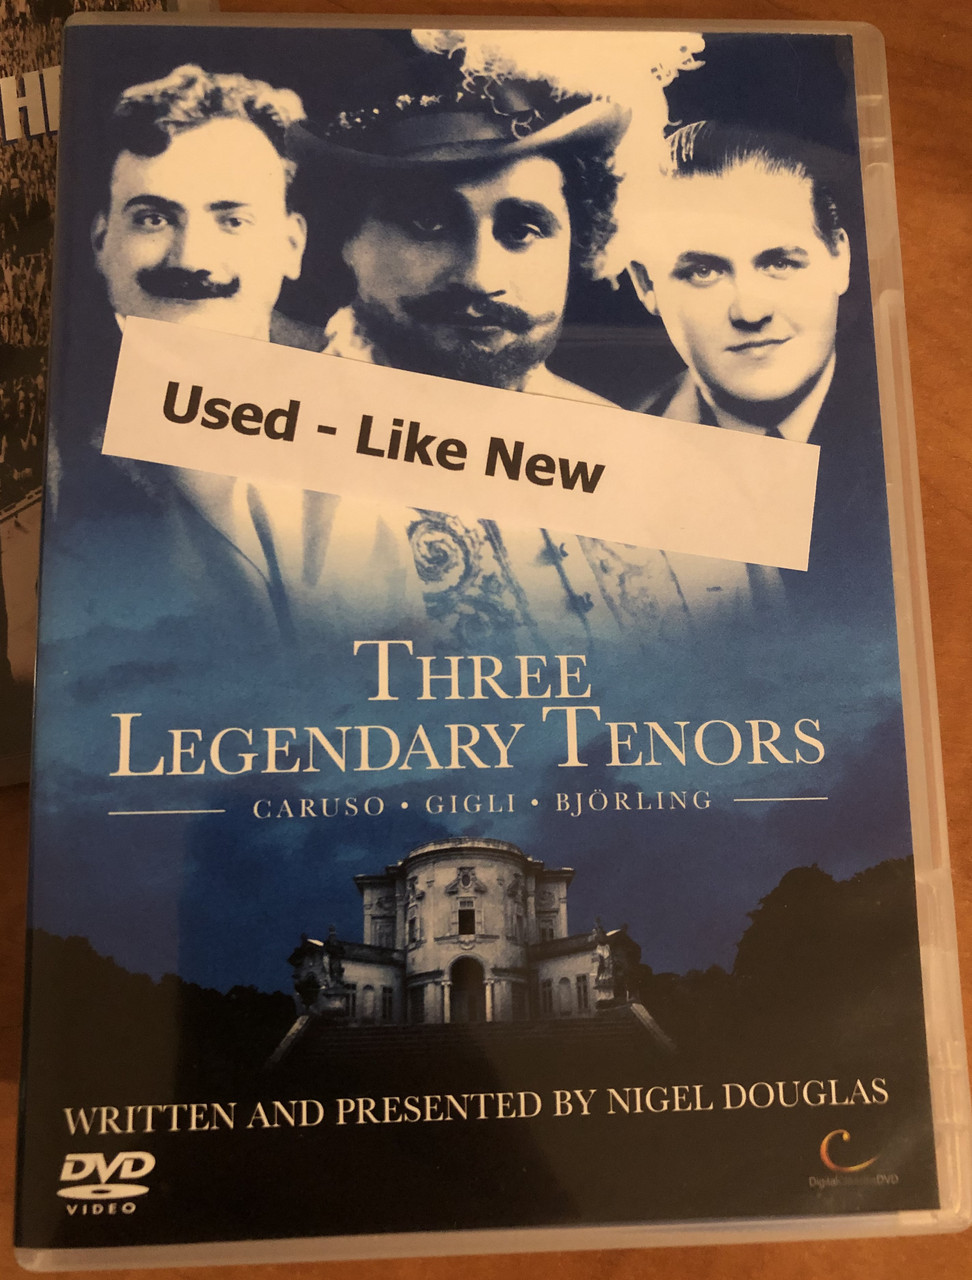 Three Legendary Tenors / CARUSO GIGLI BJÖRLING / WRITTEN AND PRESENTED BY  NIGEL DOUGLAS / DVD Video - bibleinmylanguage